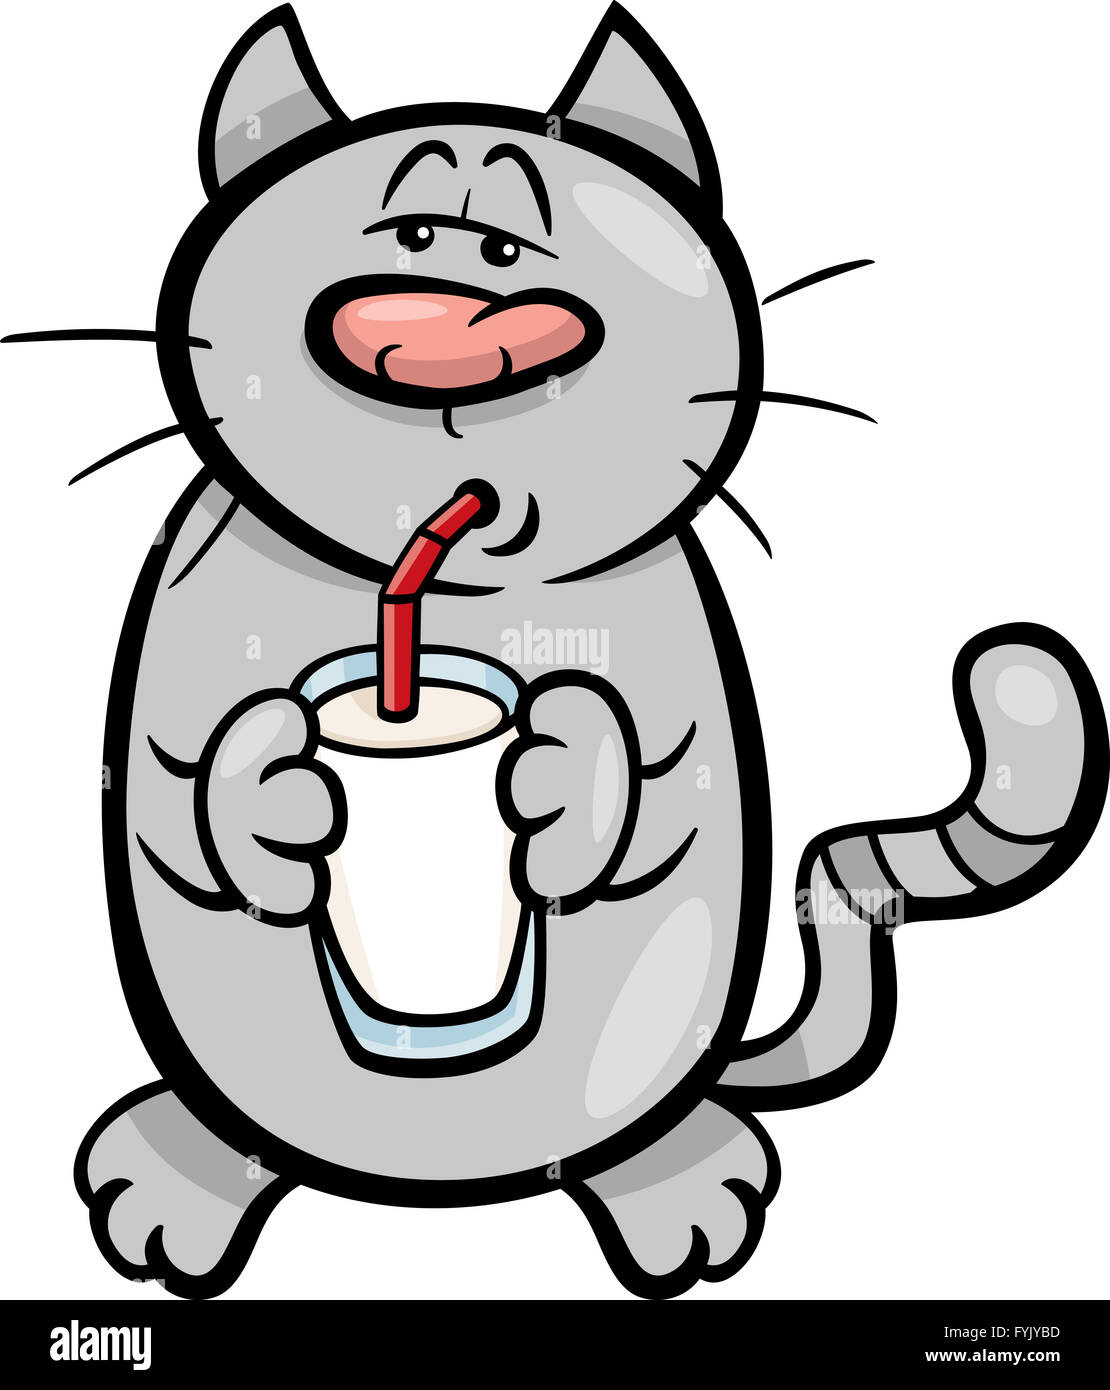 cat drink milk cartoon illustration Stock Photo - Alamy